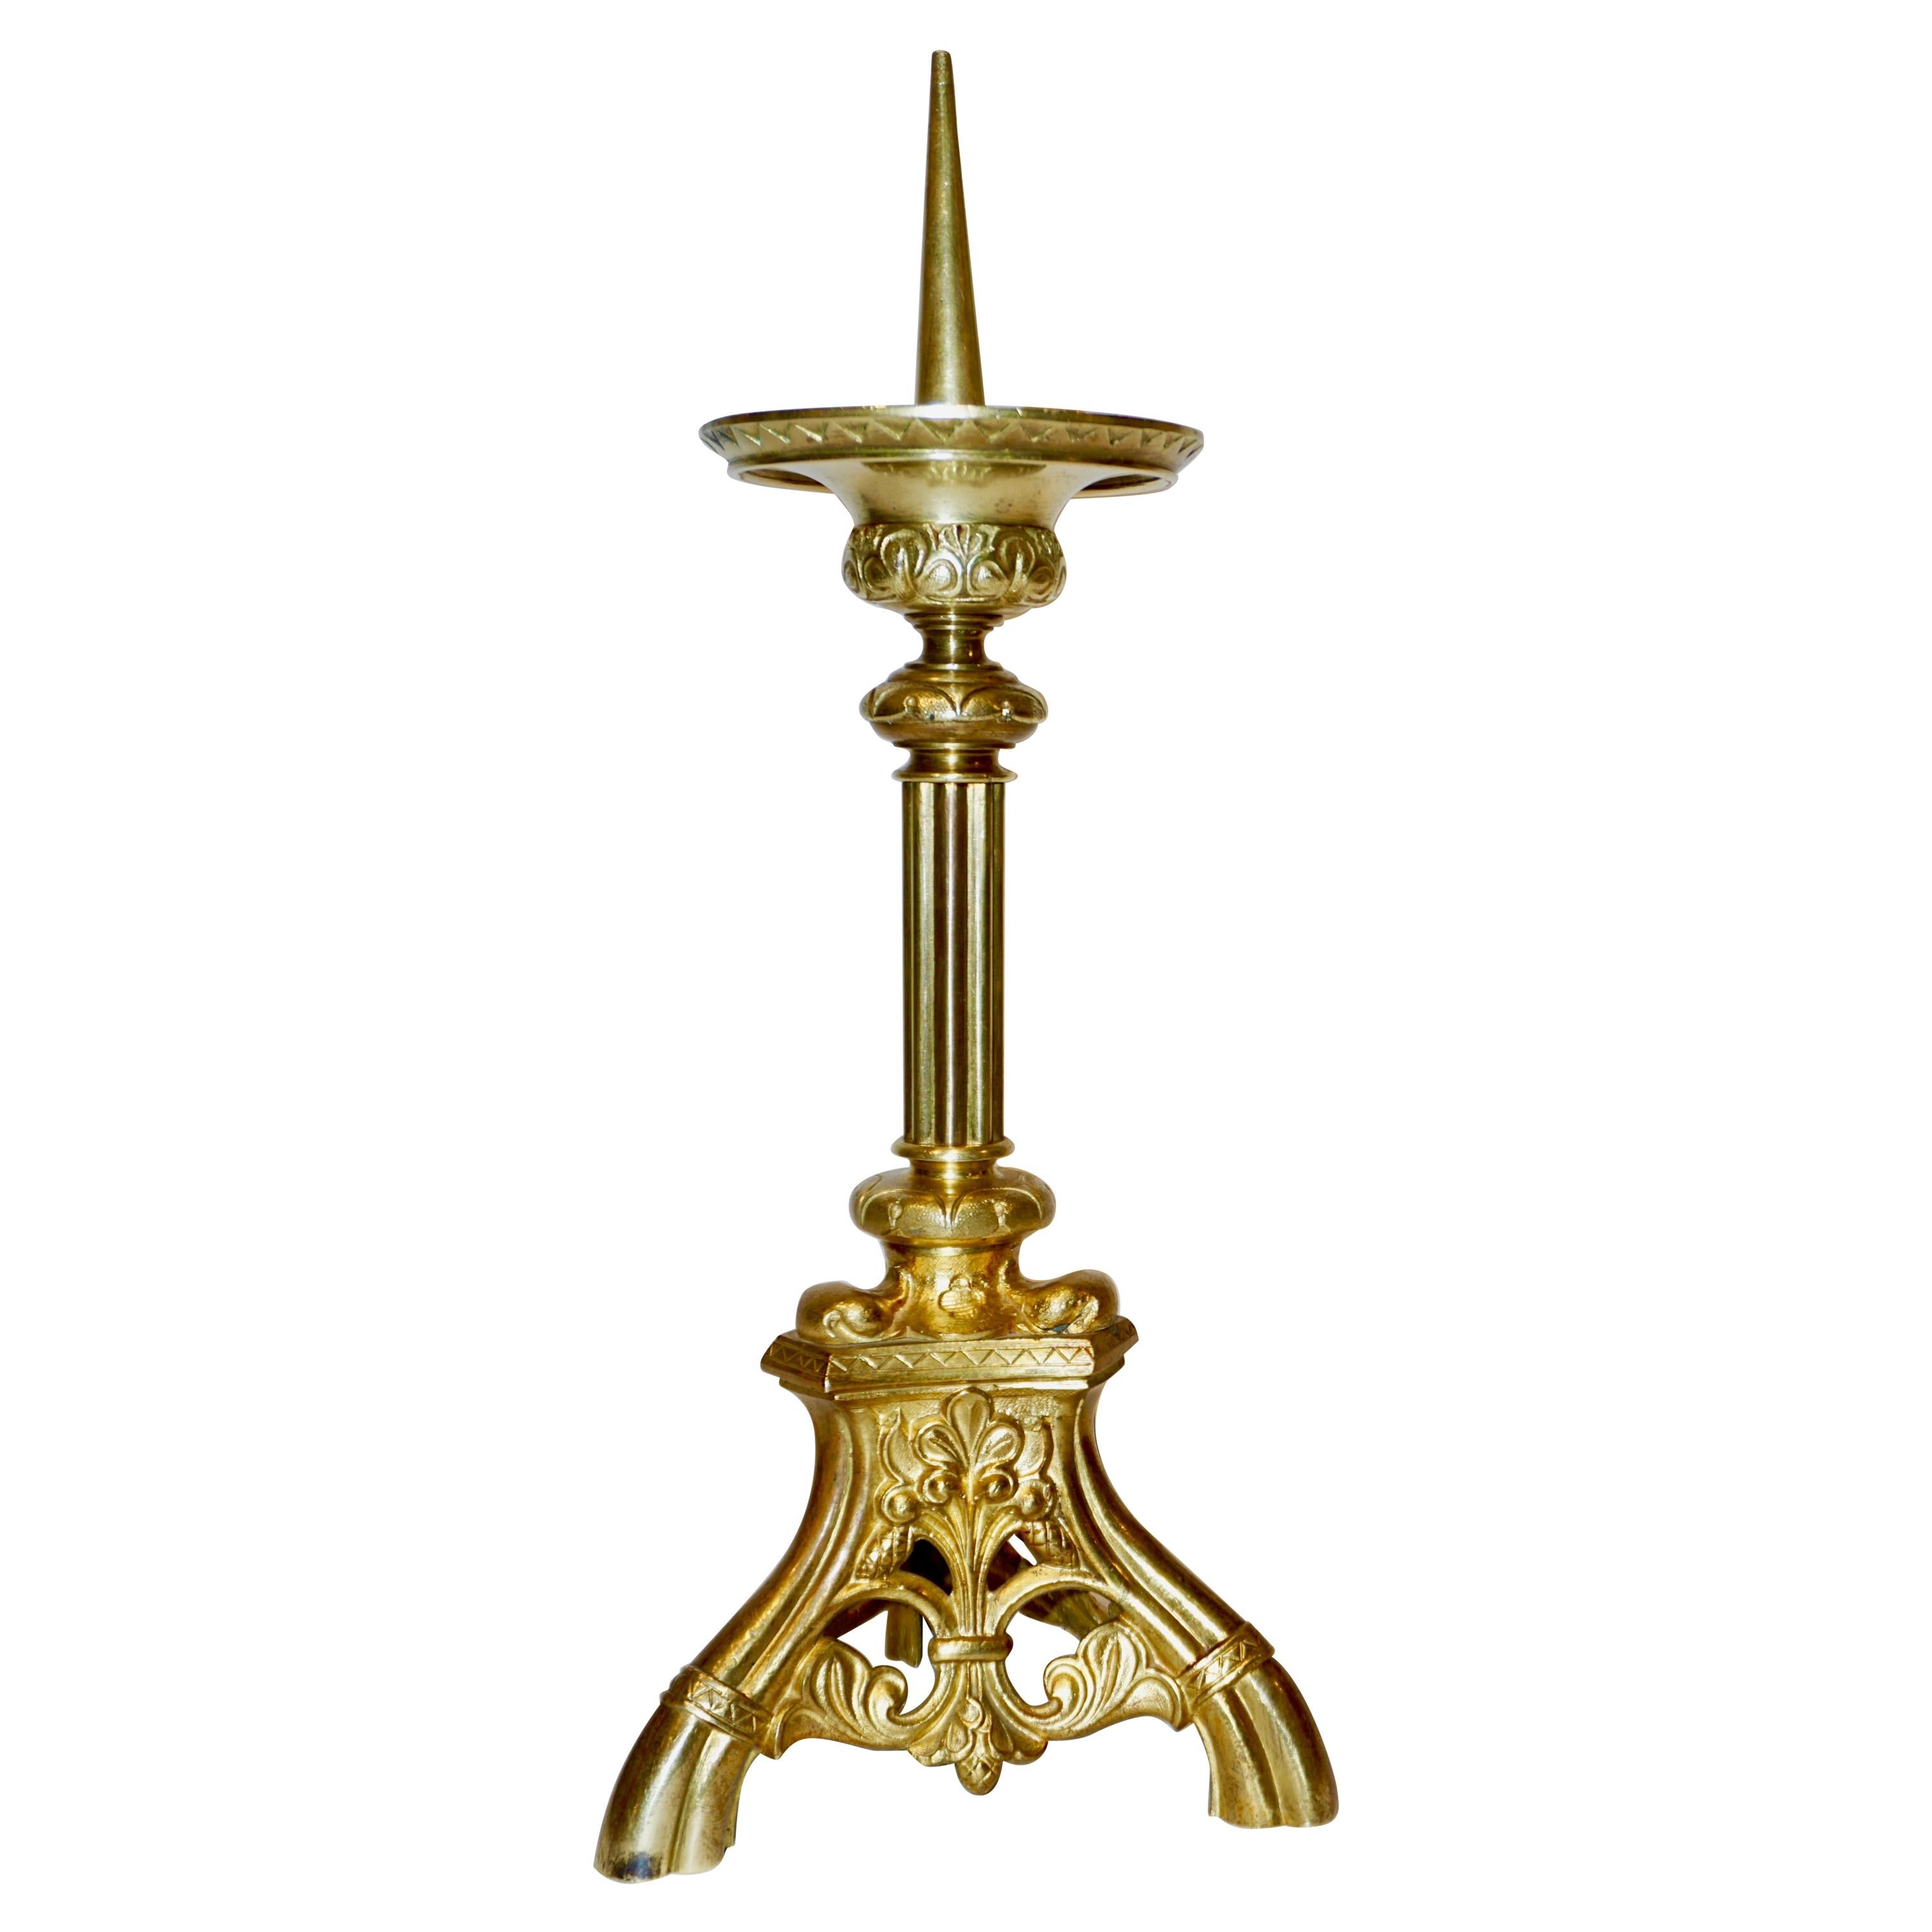 1880s French Baroque Revival Gilt Bronze Ormolu Pricket Candlestick